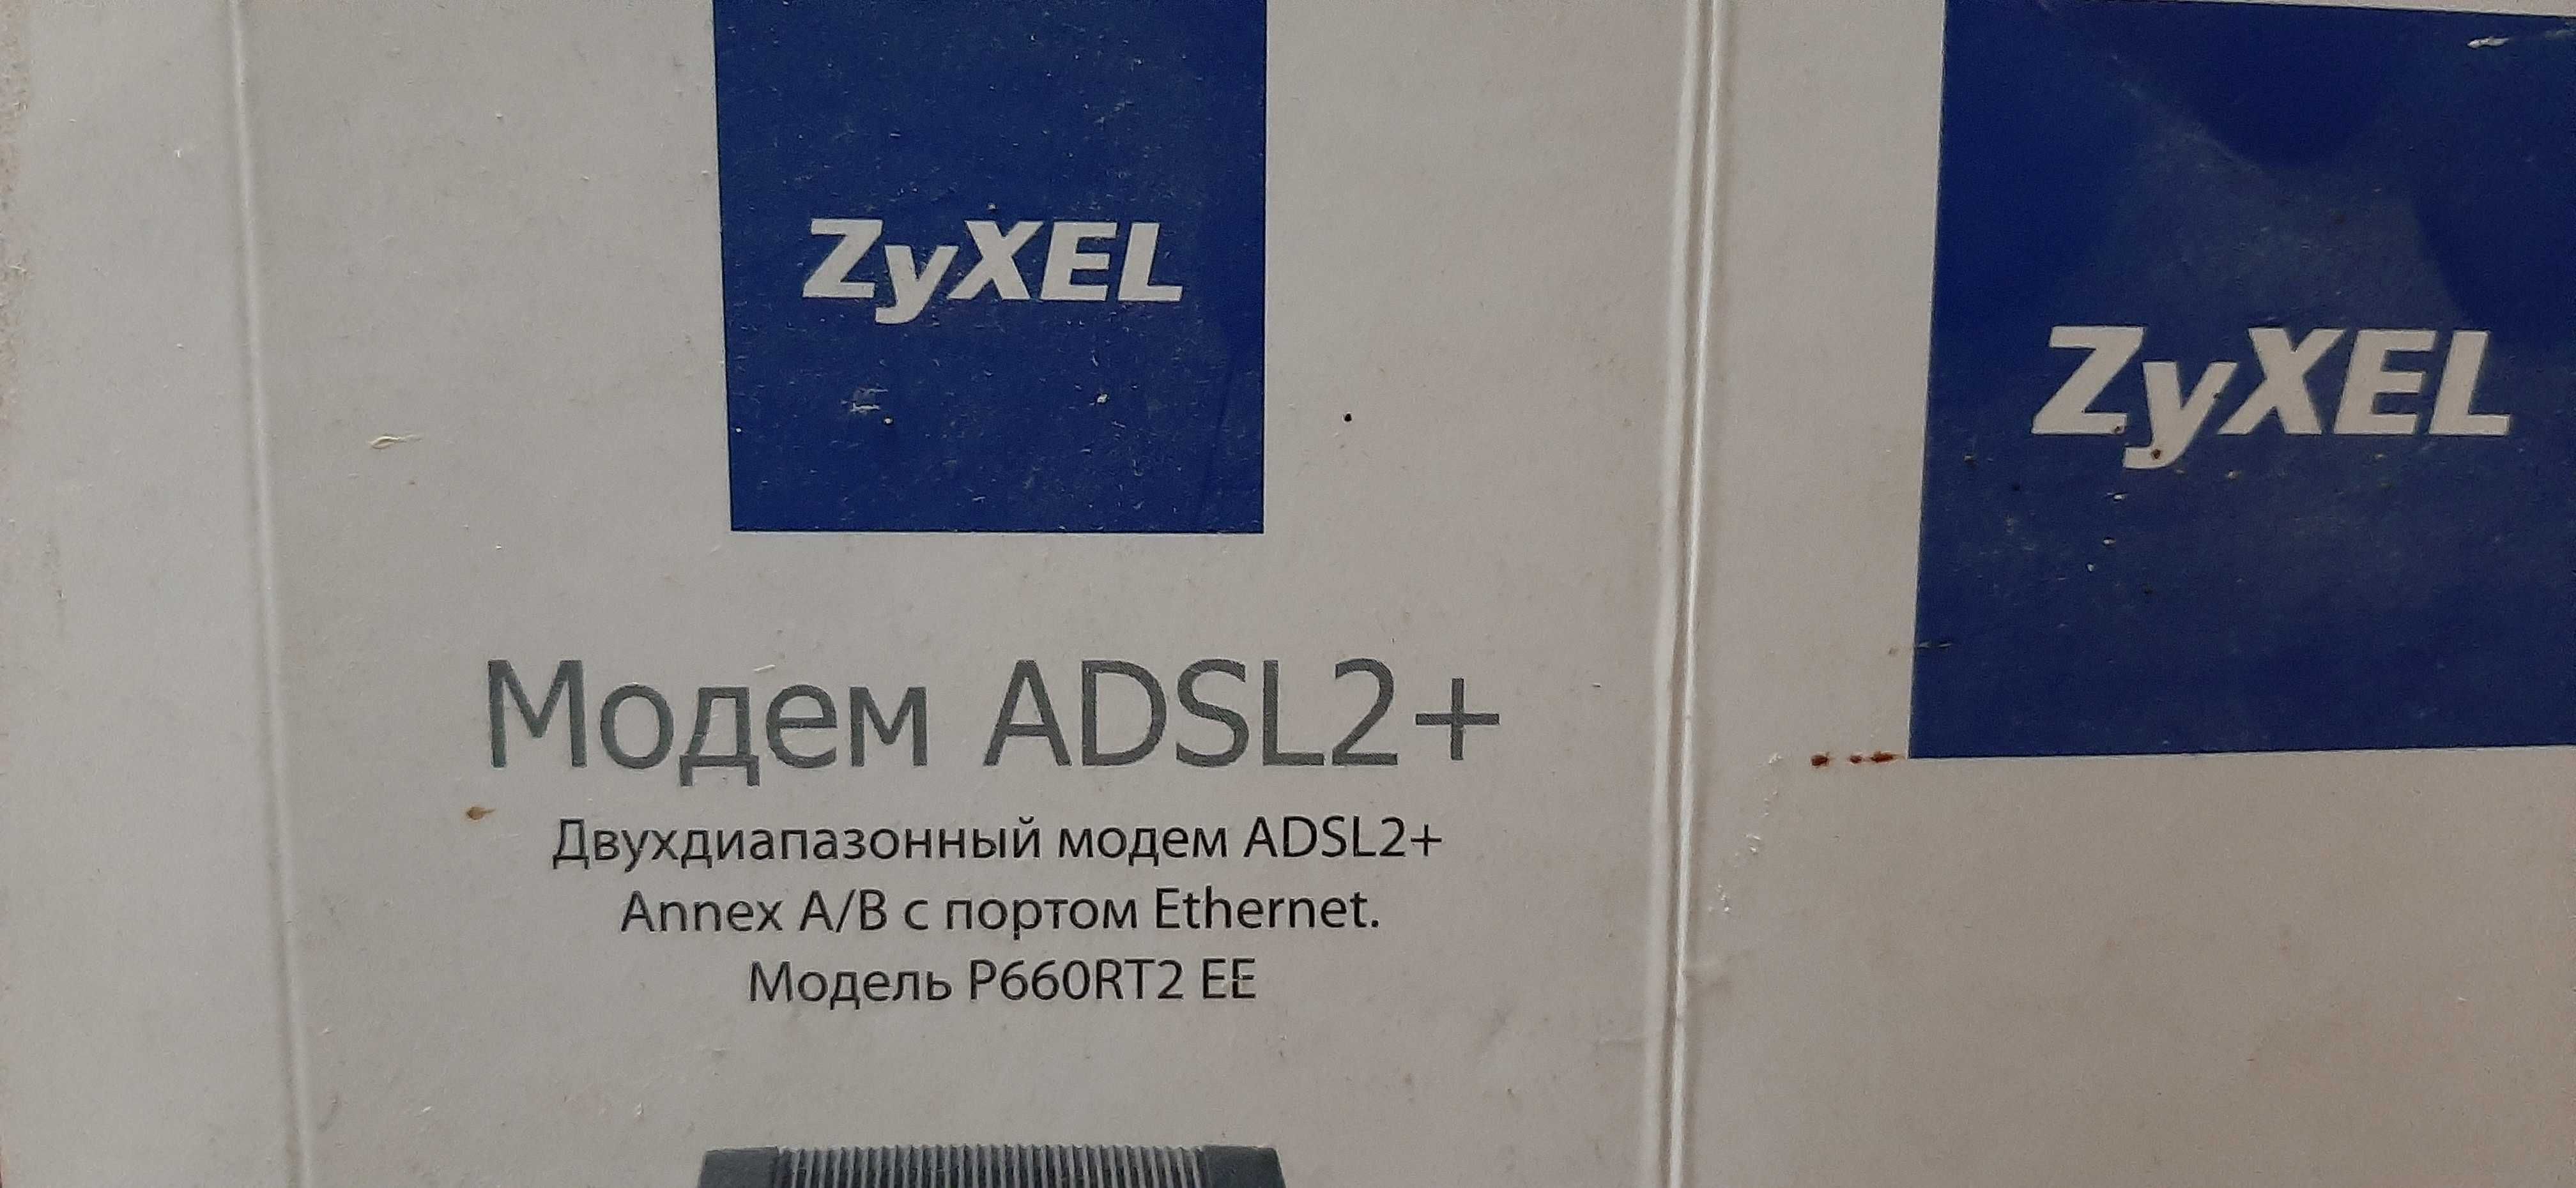 ADSL-модем Zyxel P660RT2EE